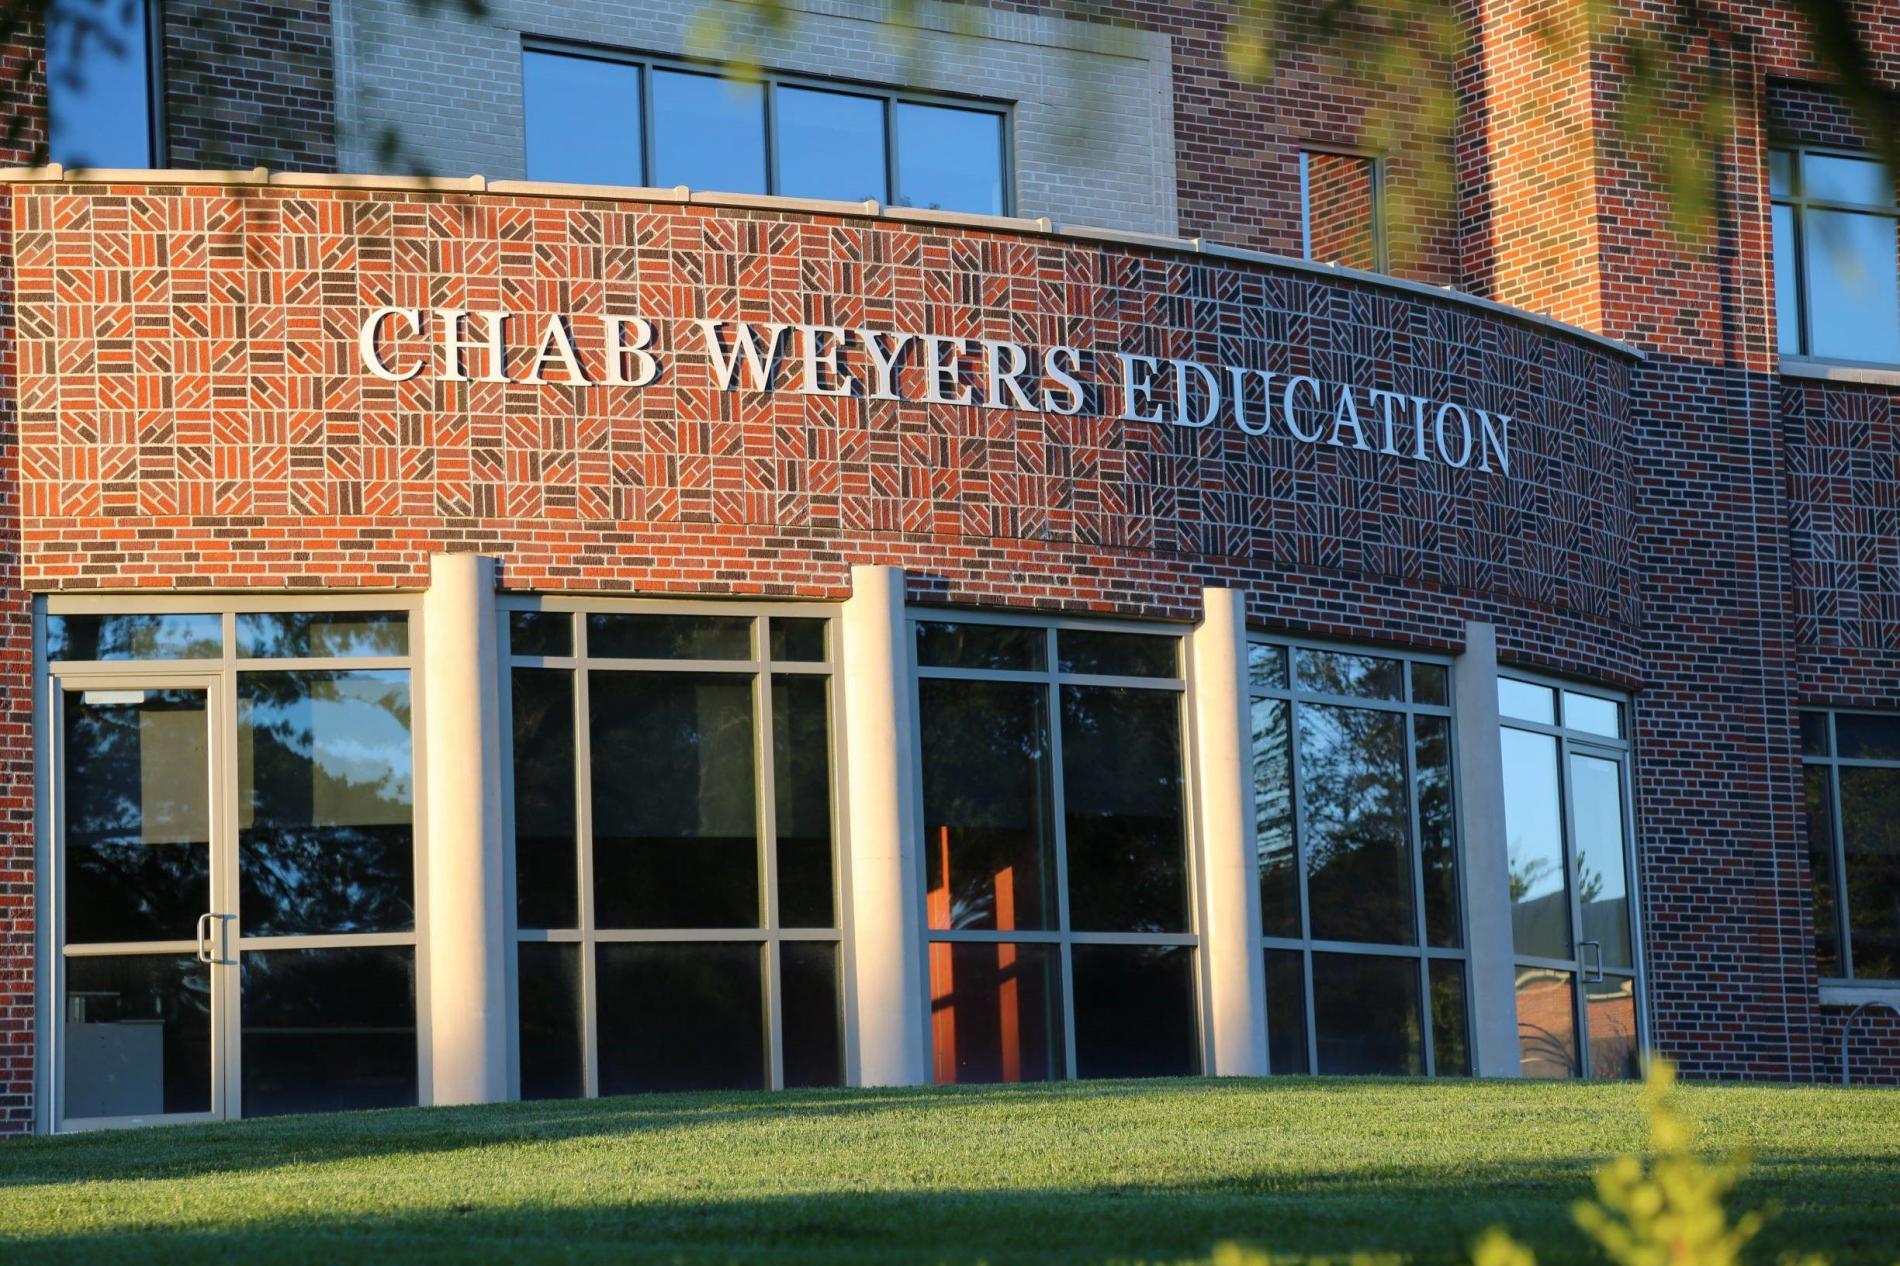 Chab Weyers Education Building